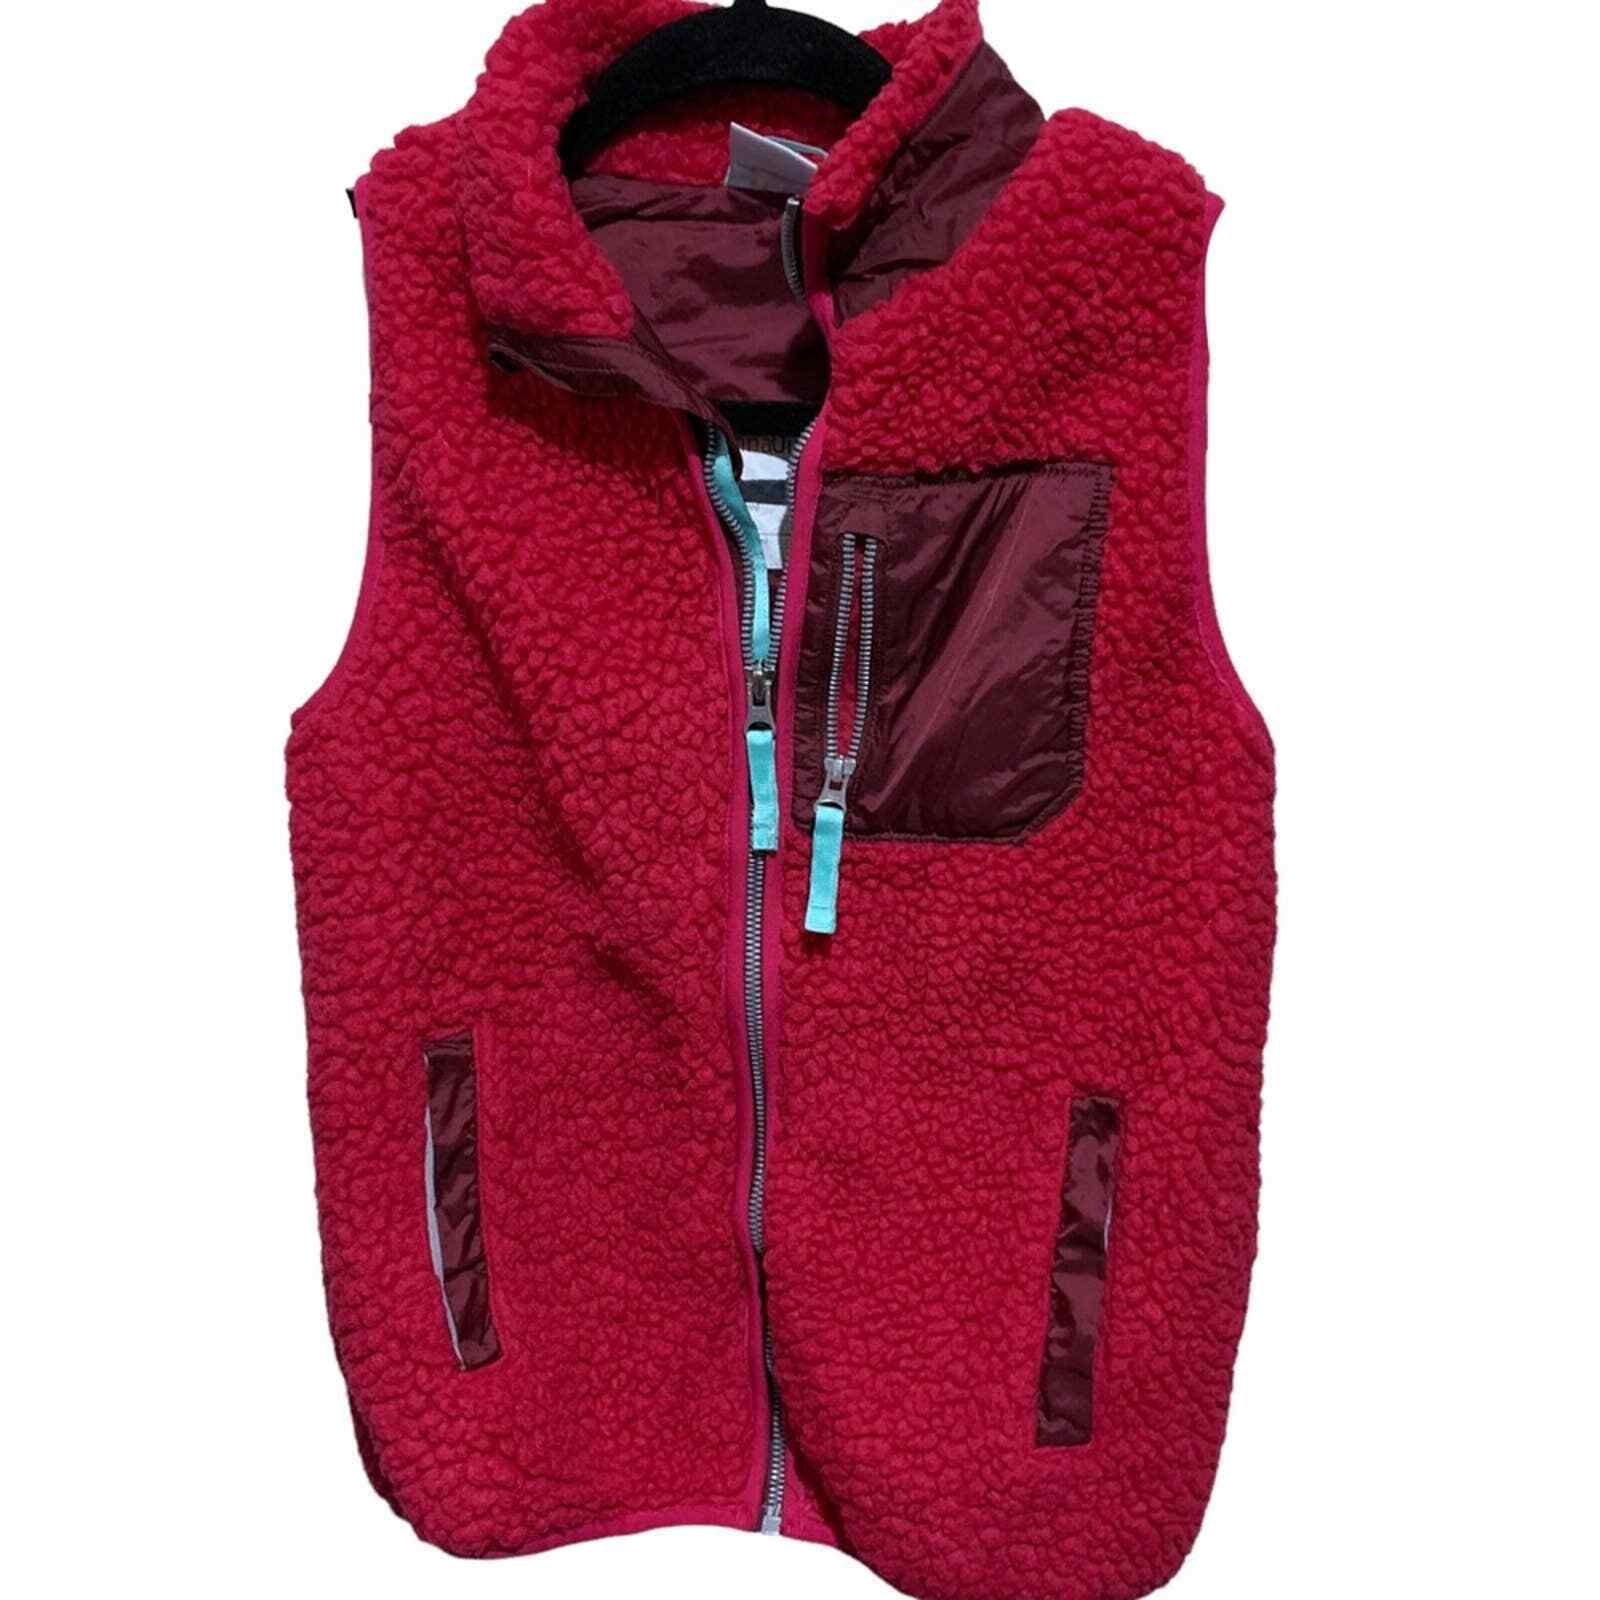 Hanna Andersson Pink Sherpa Fleece Vest